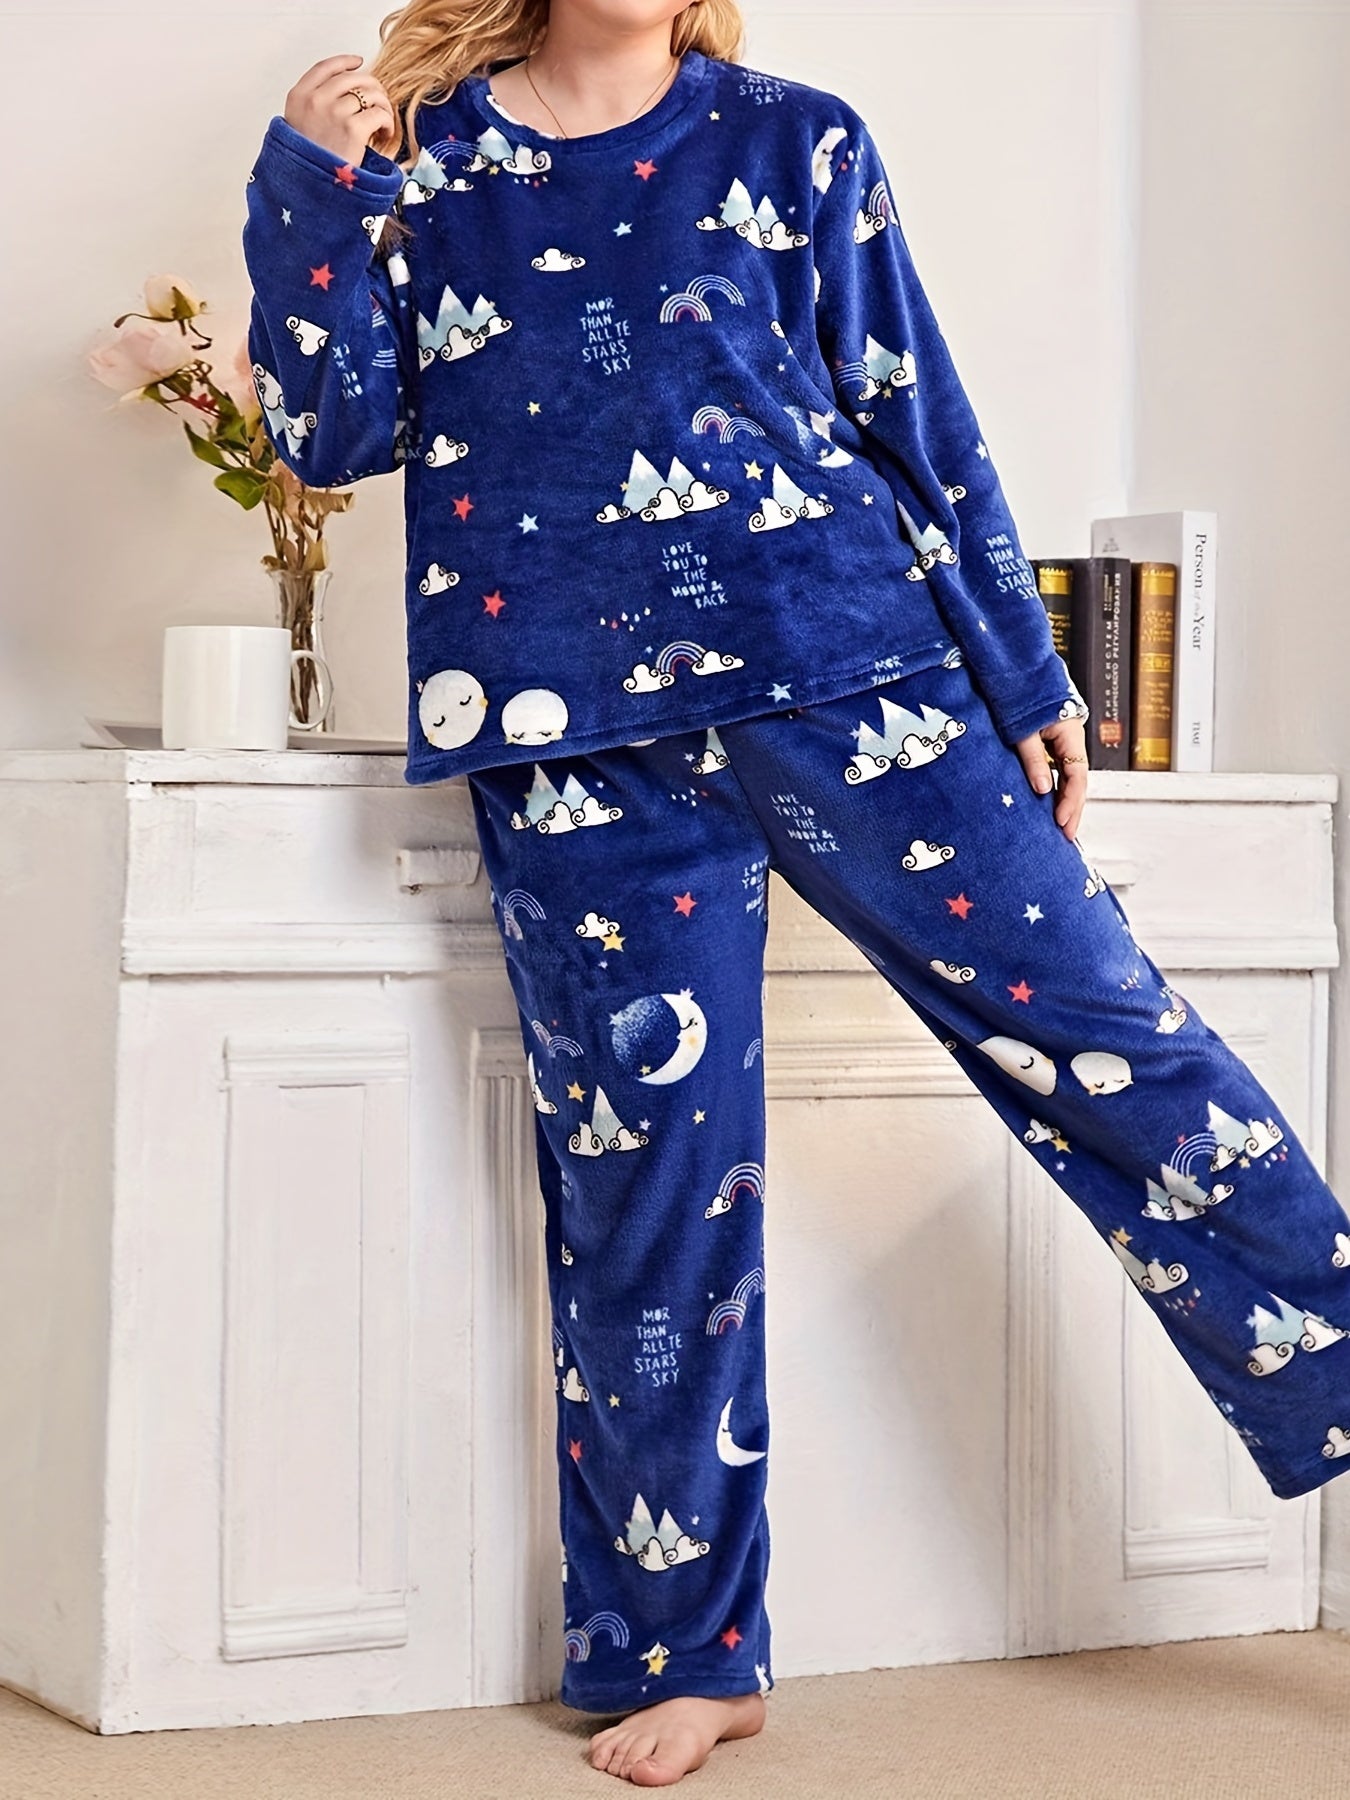 Stylish Plus Size Pajama Set - Women's Star & Cloud Print Long Sleeve Top & Pants - Perfect for Home Wear!